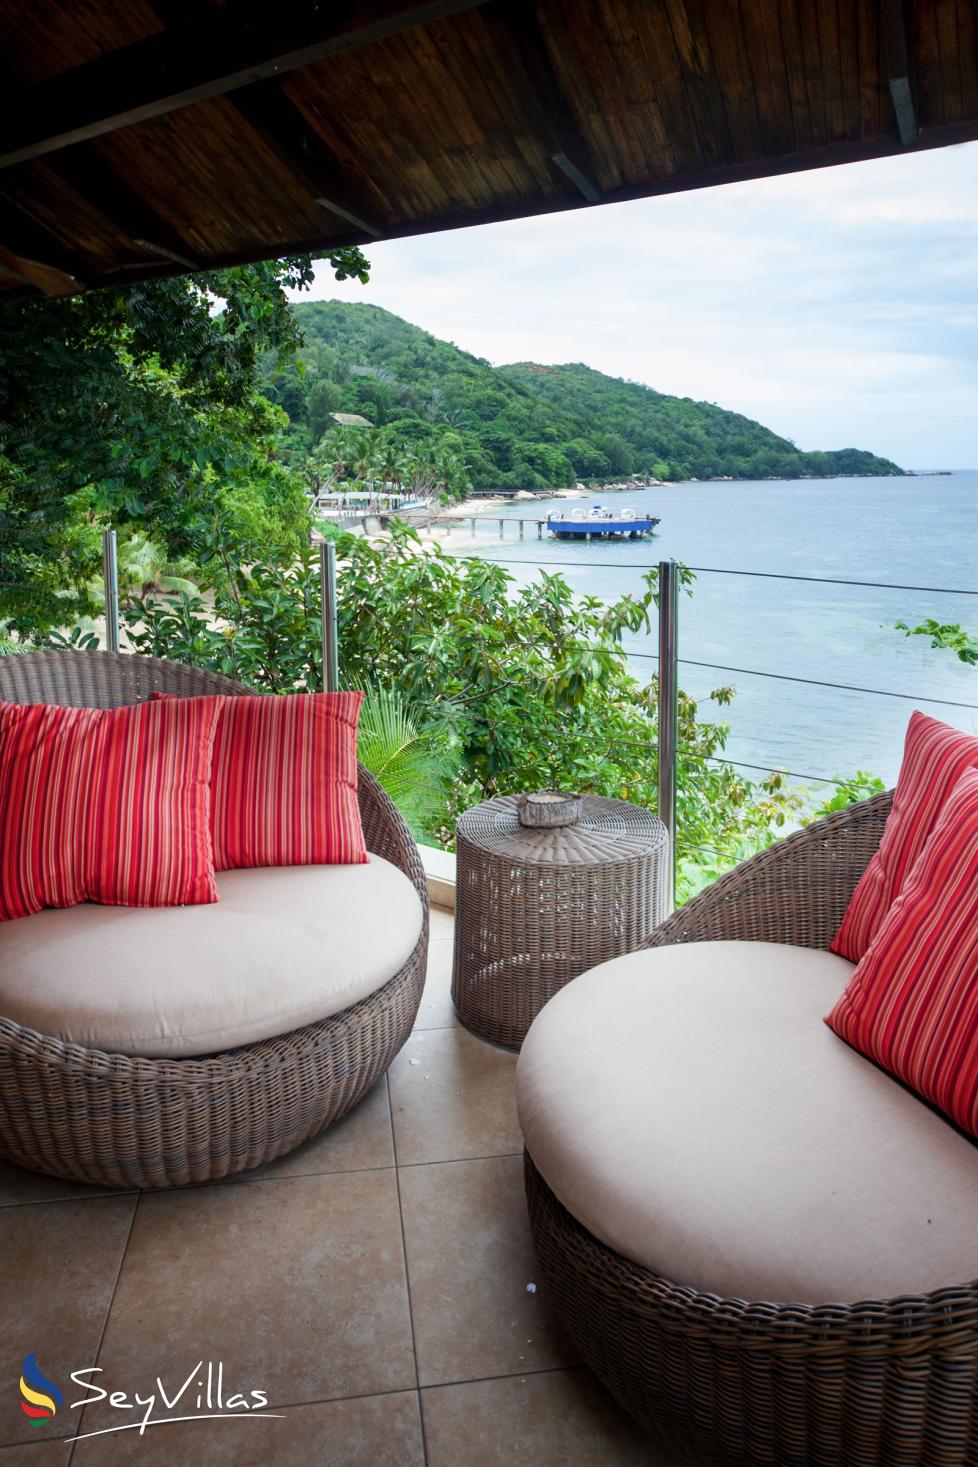 Foto 55: Coco de Mer & Black Parrot Suites - Standard - Praslin (Seychelles)